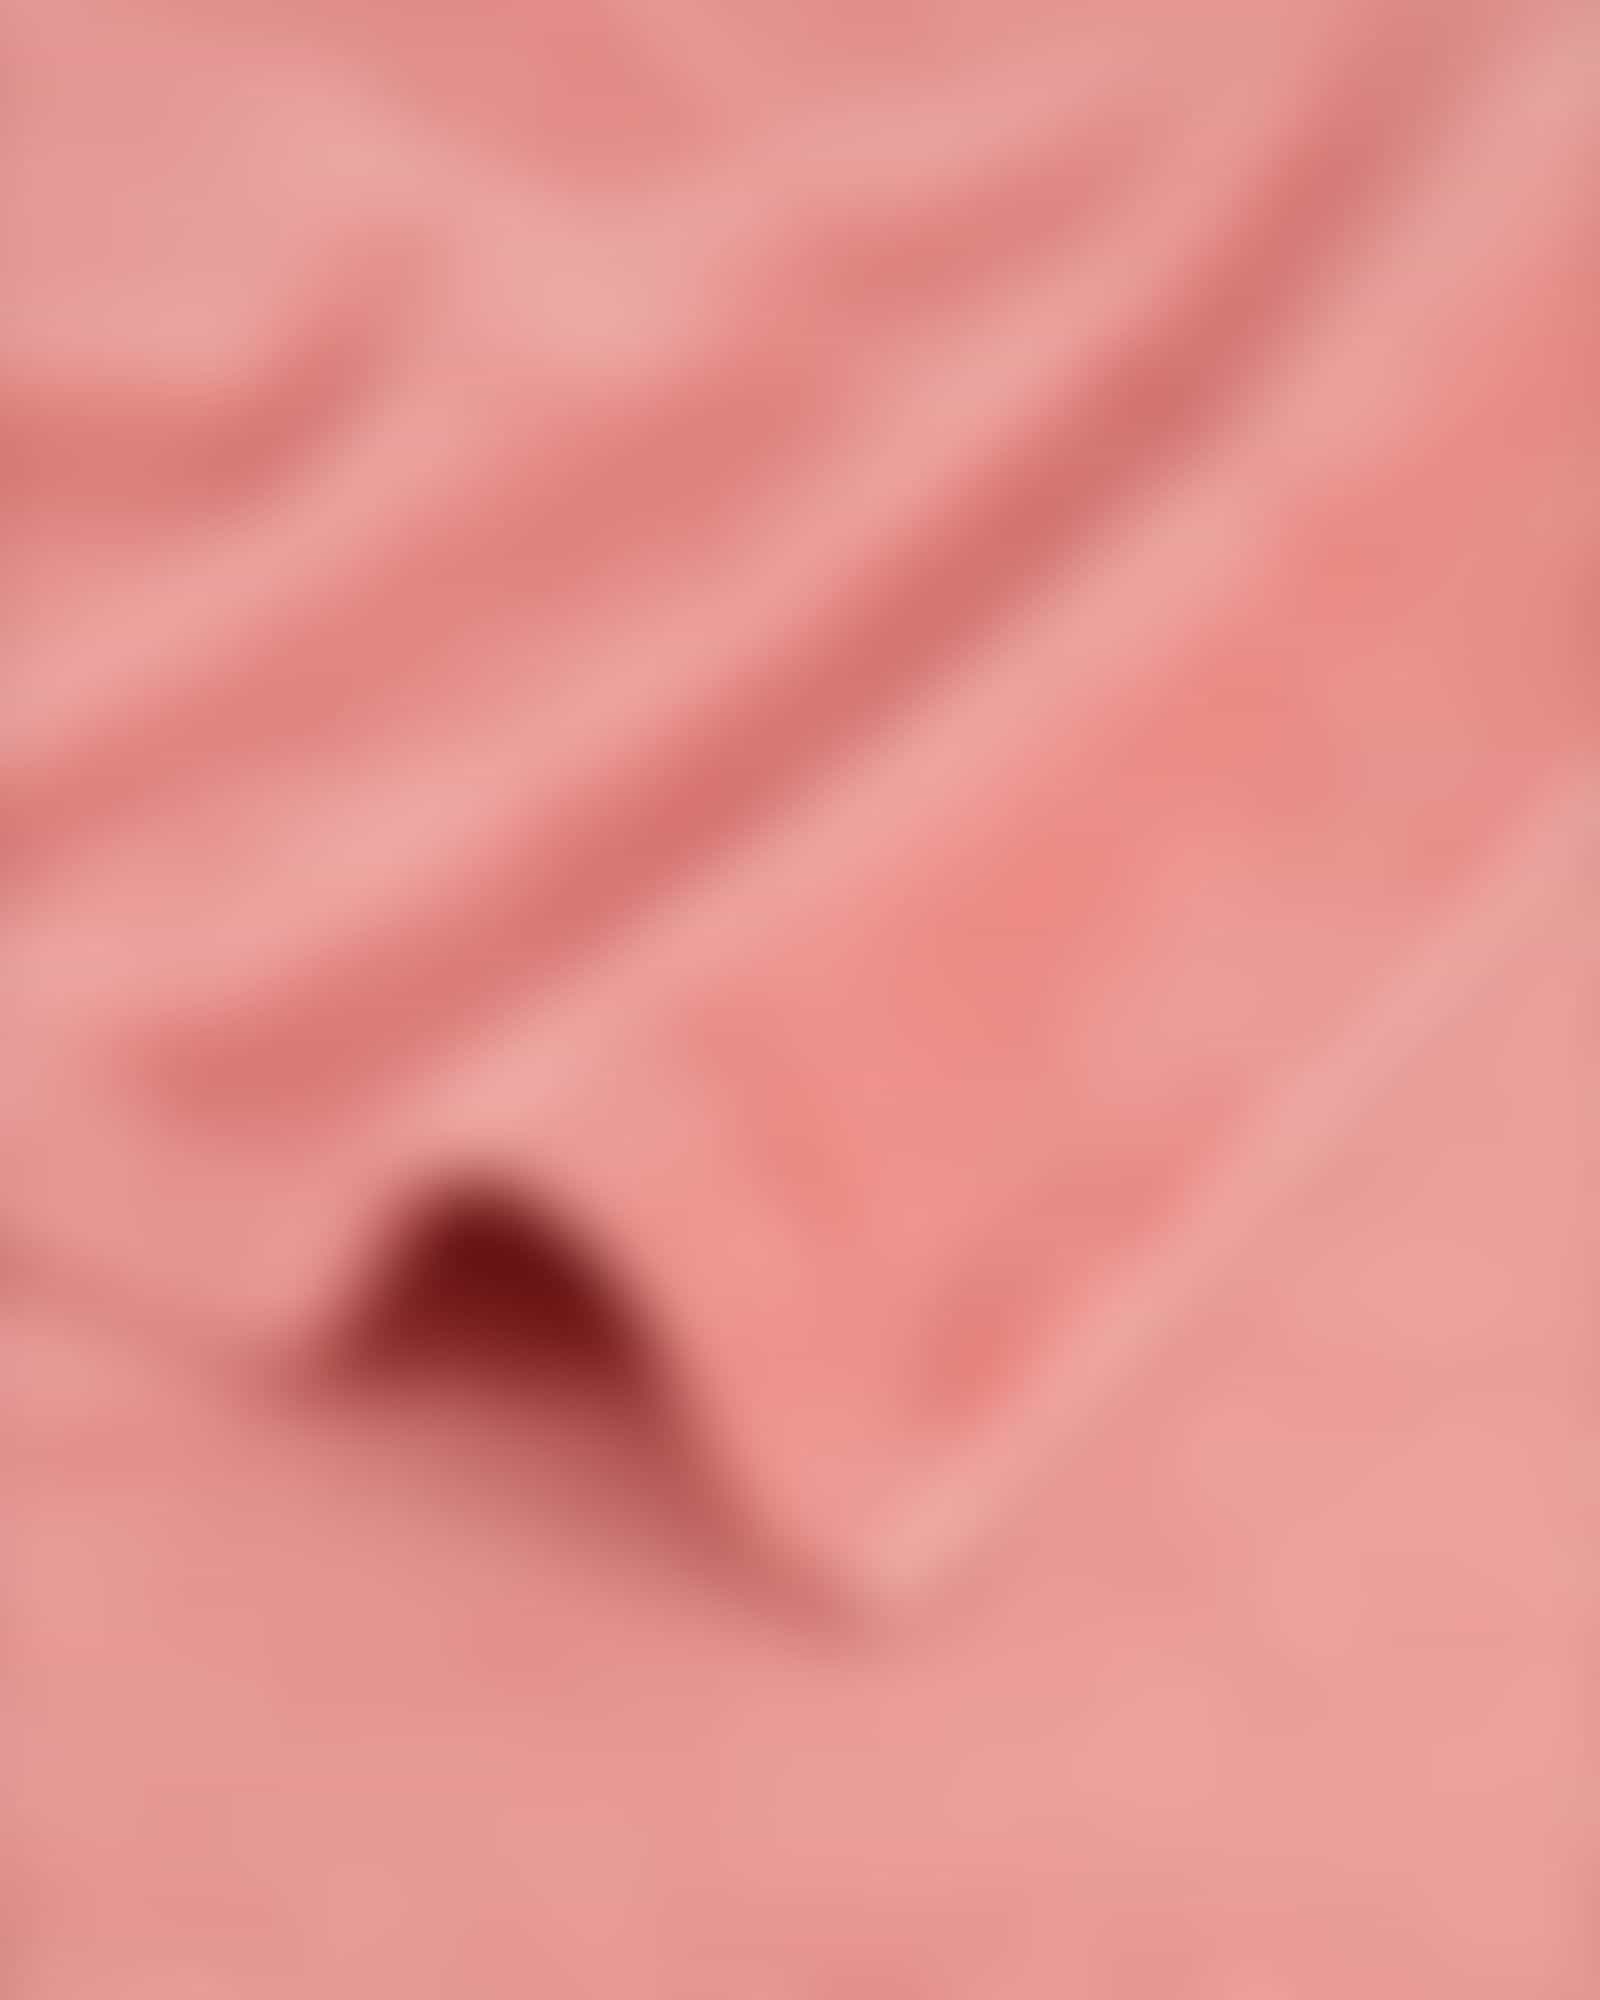 Cawö Handtücher Life Style Uni 7007 - Farbe: rouge - 214 - Waschhandschuh 16x22 cm